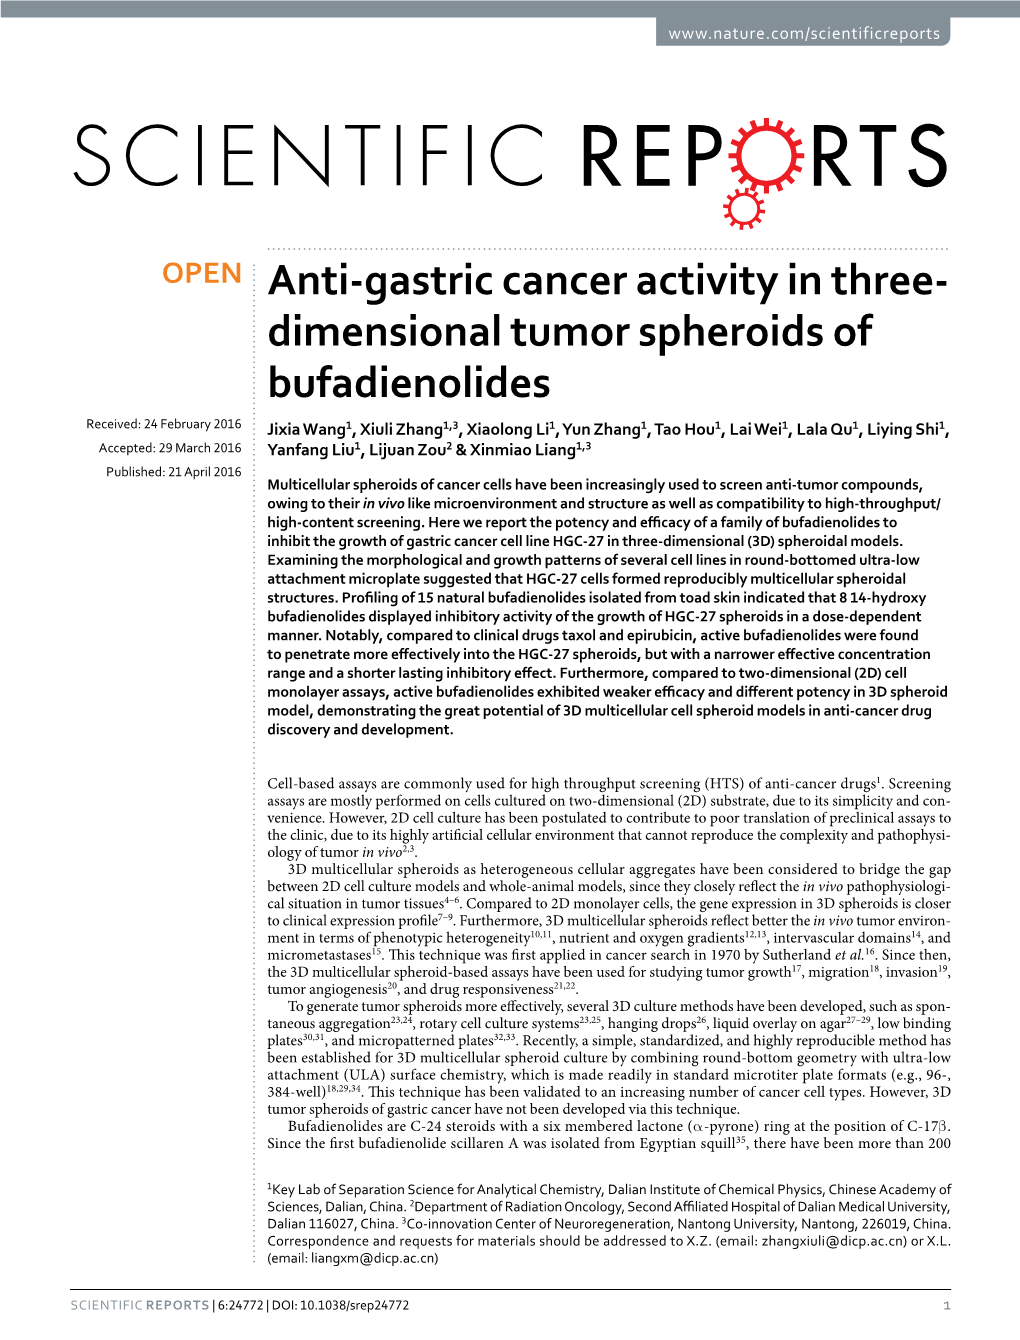 Anti-Gastric Cancer Activity in Three-Dimensional Tumor Spheroids of Bufadienolides